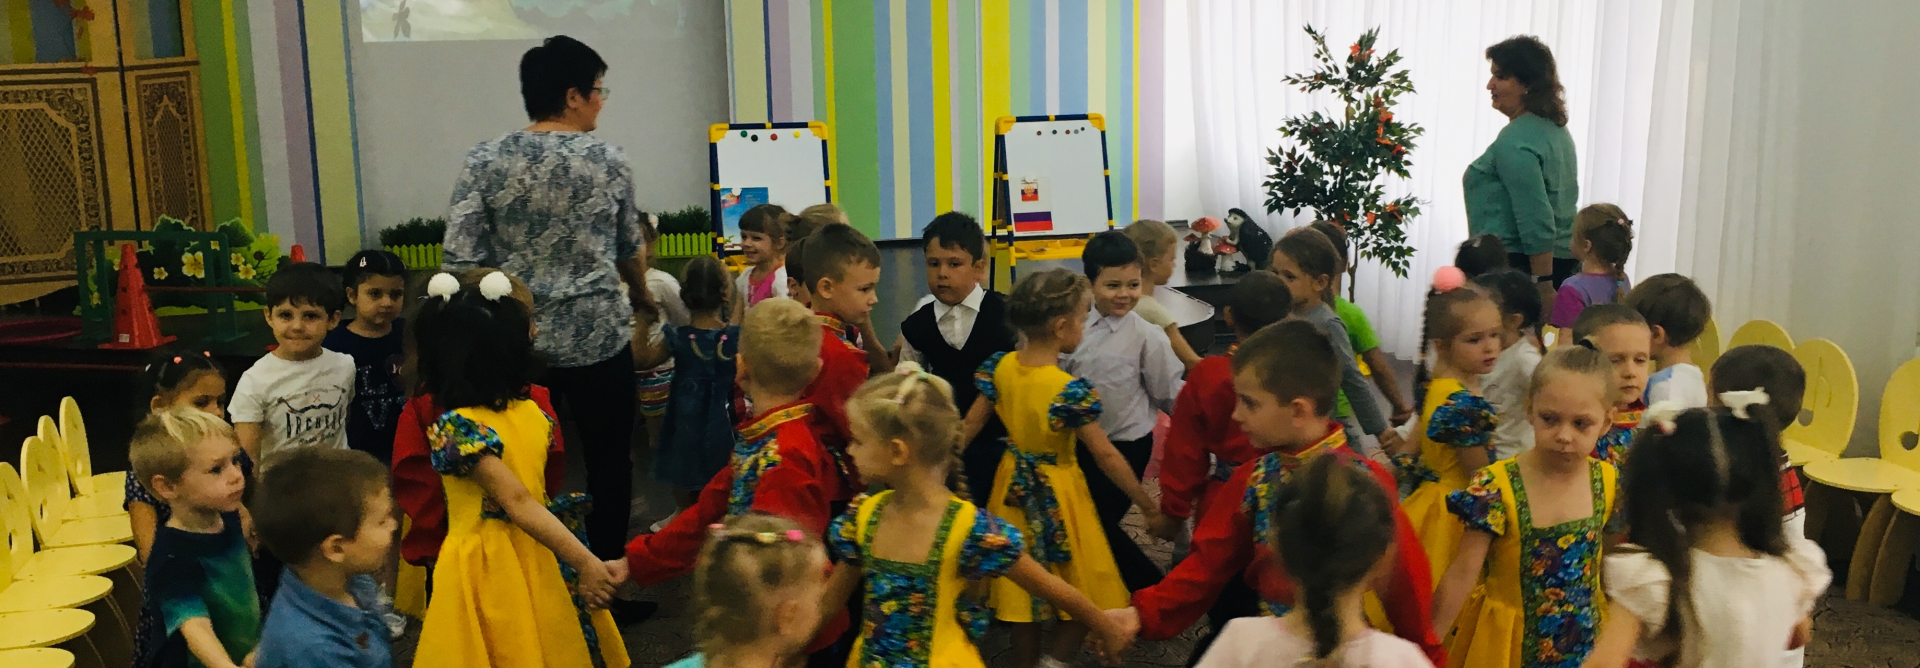 Тематическое мероприятие прошло в гимназии Пушкова